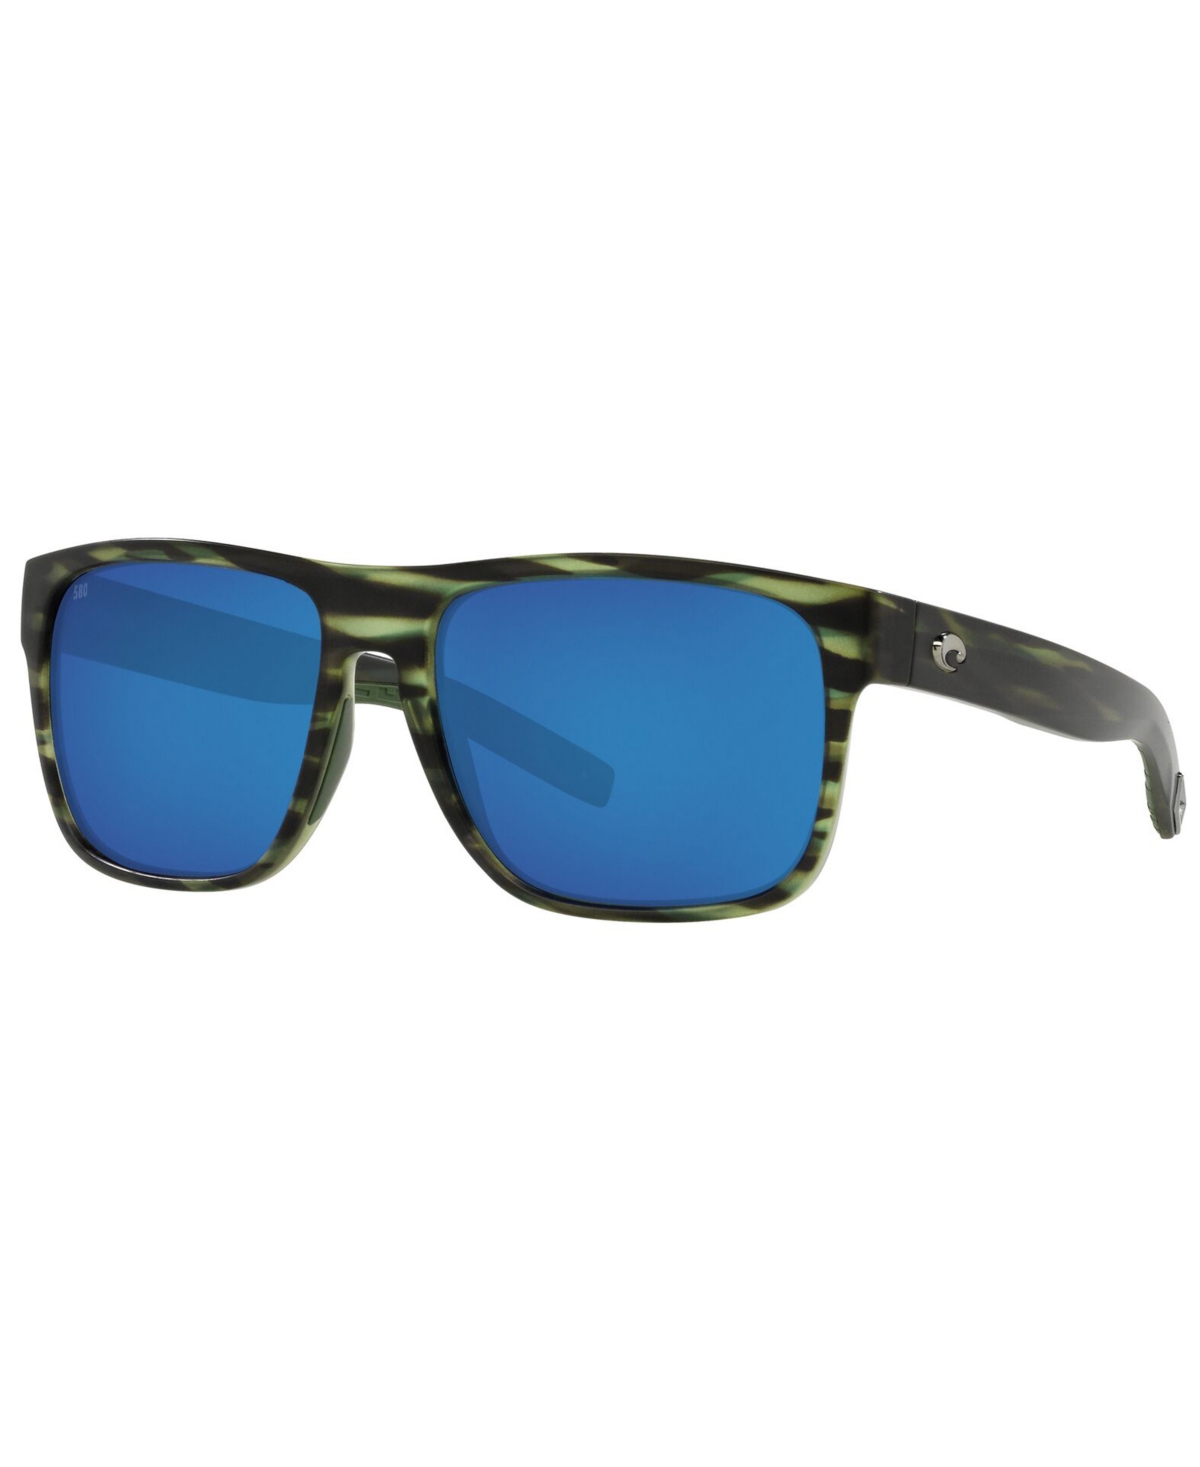 Spearo Xl Polarized Sunglasses, 6S9013 59 - MATTE REEF/BLUE MIRROR G